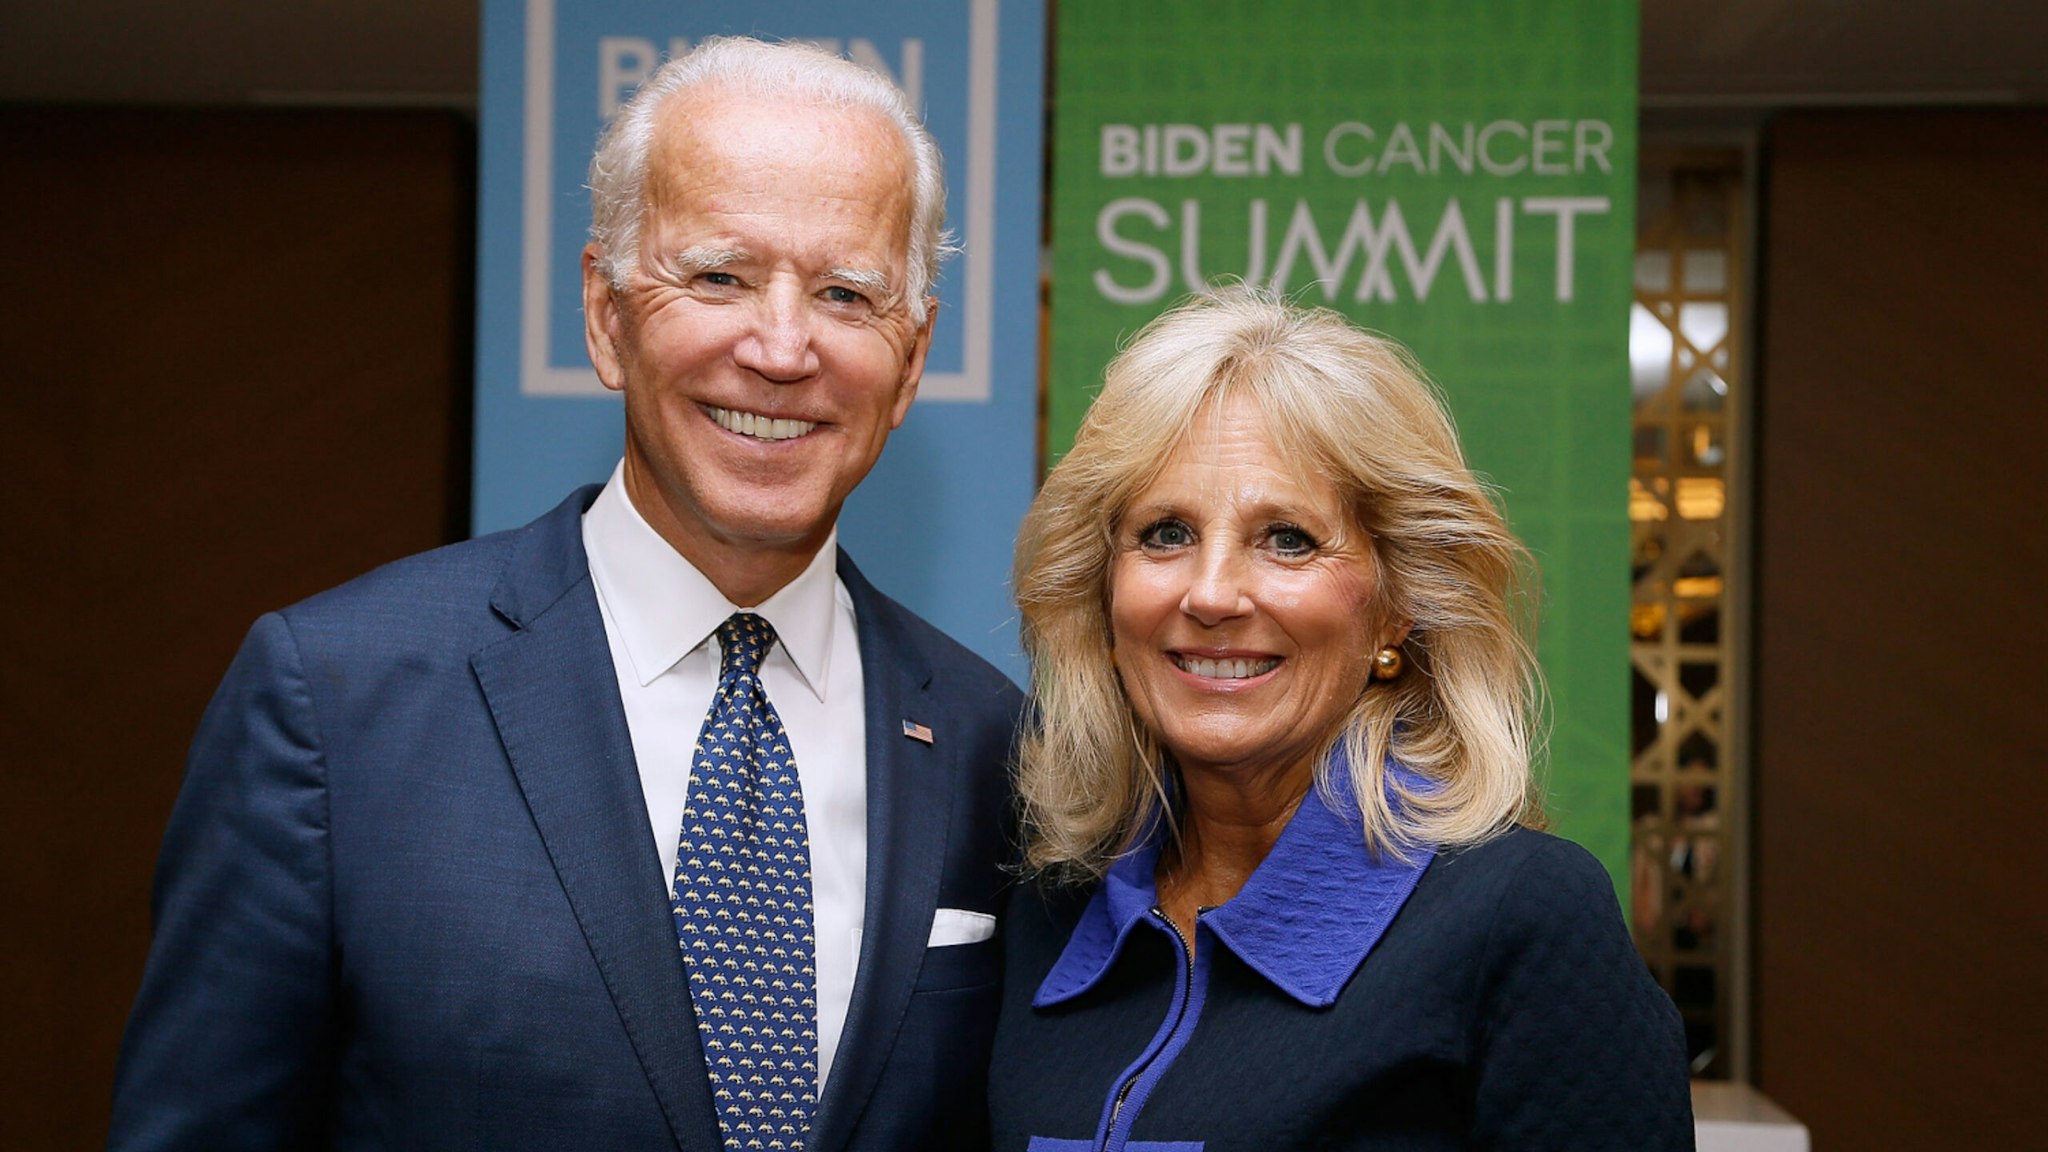 Former U.S. Vice President Joe Biden and his wife, Dr. Jill Biden, host the Biden Cancer Summit Welcome Reception at Intercontinental Hotel on September 20, 2018 in Washington, DC.